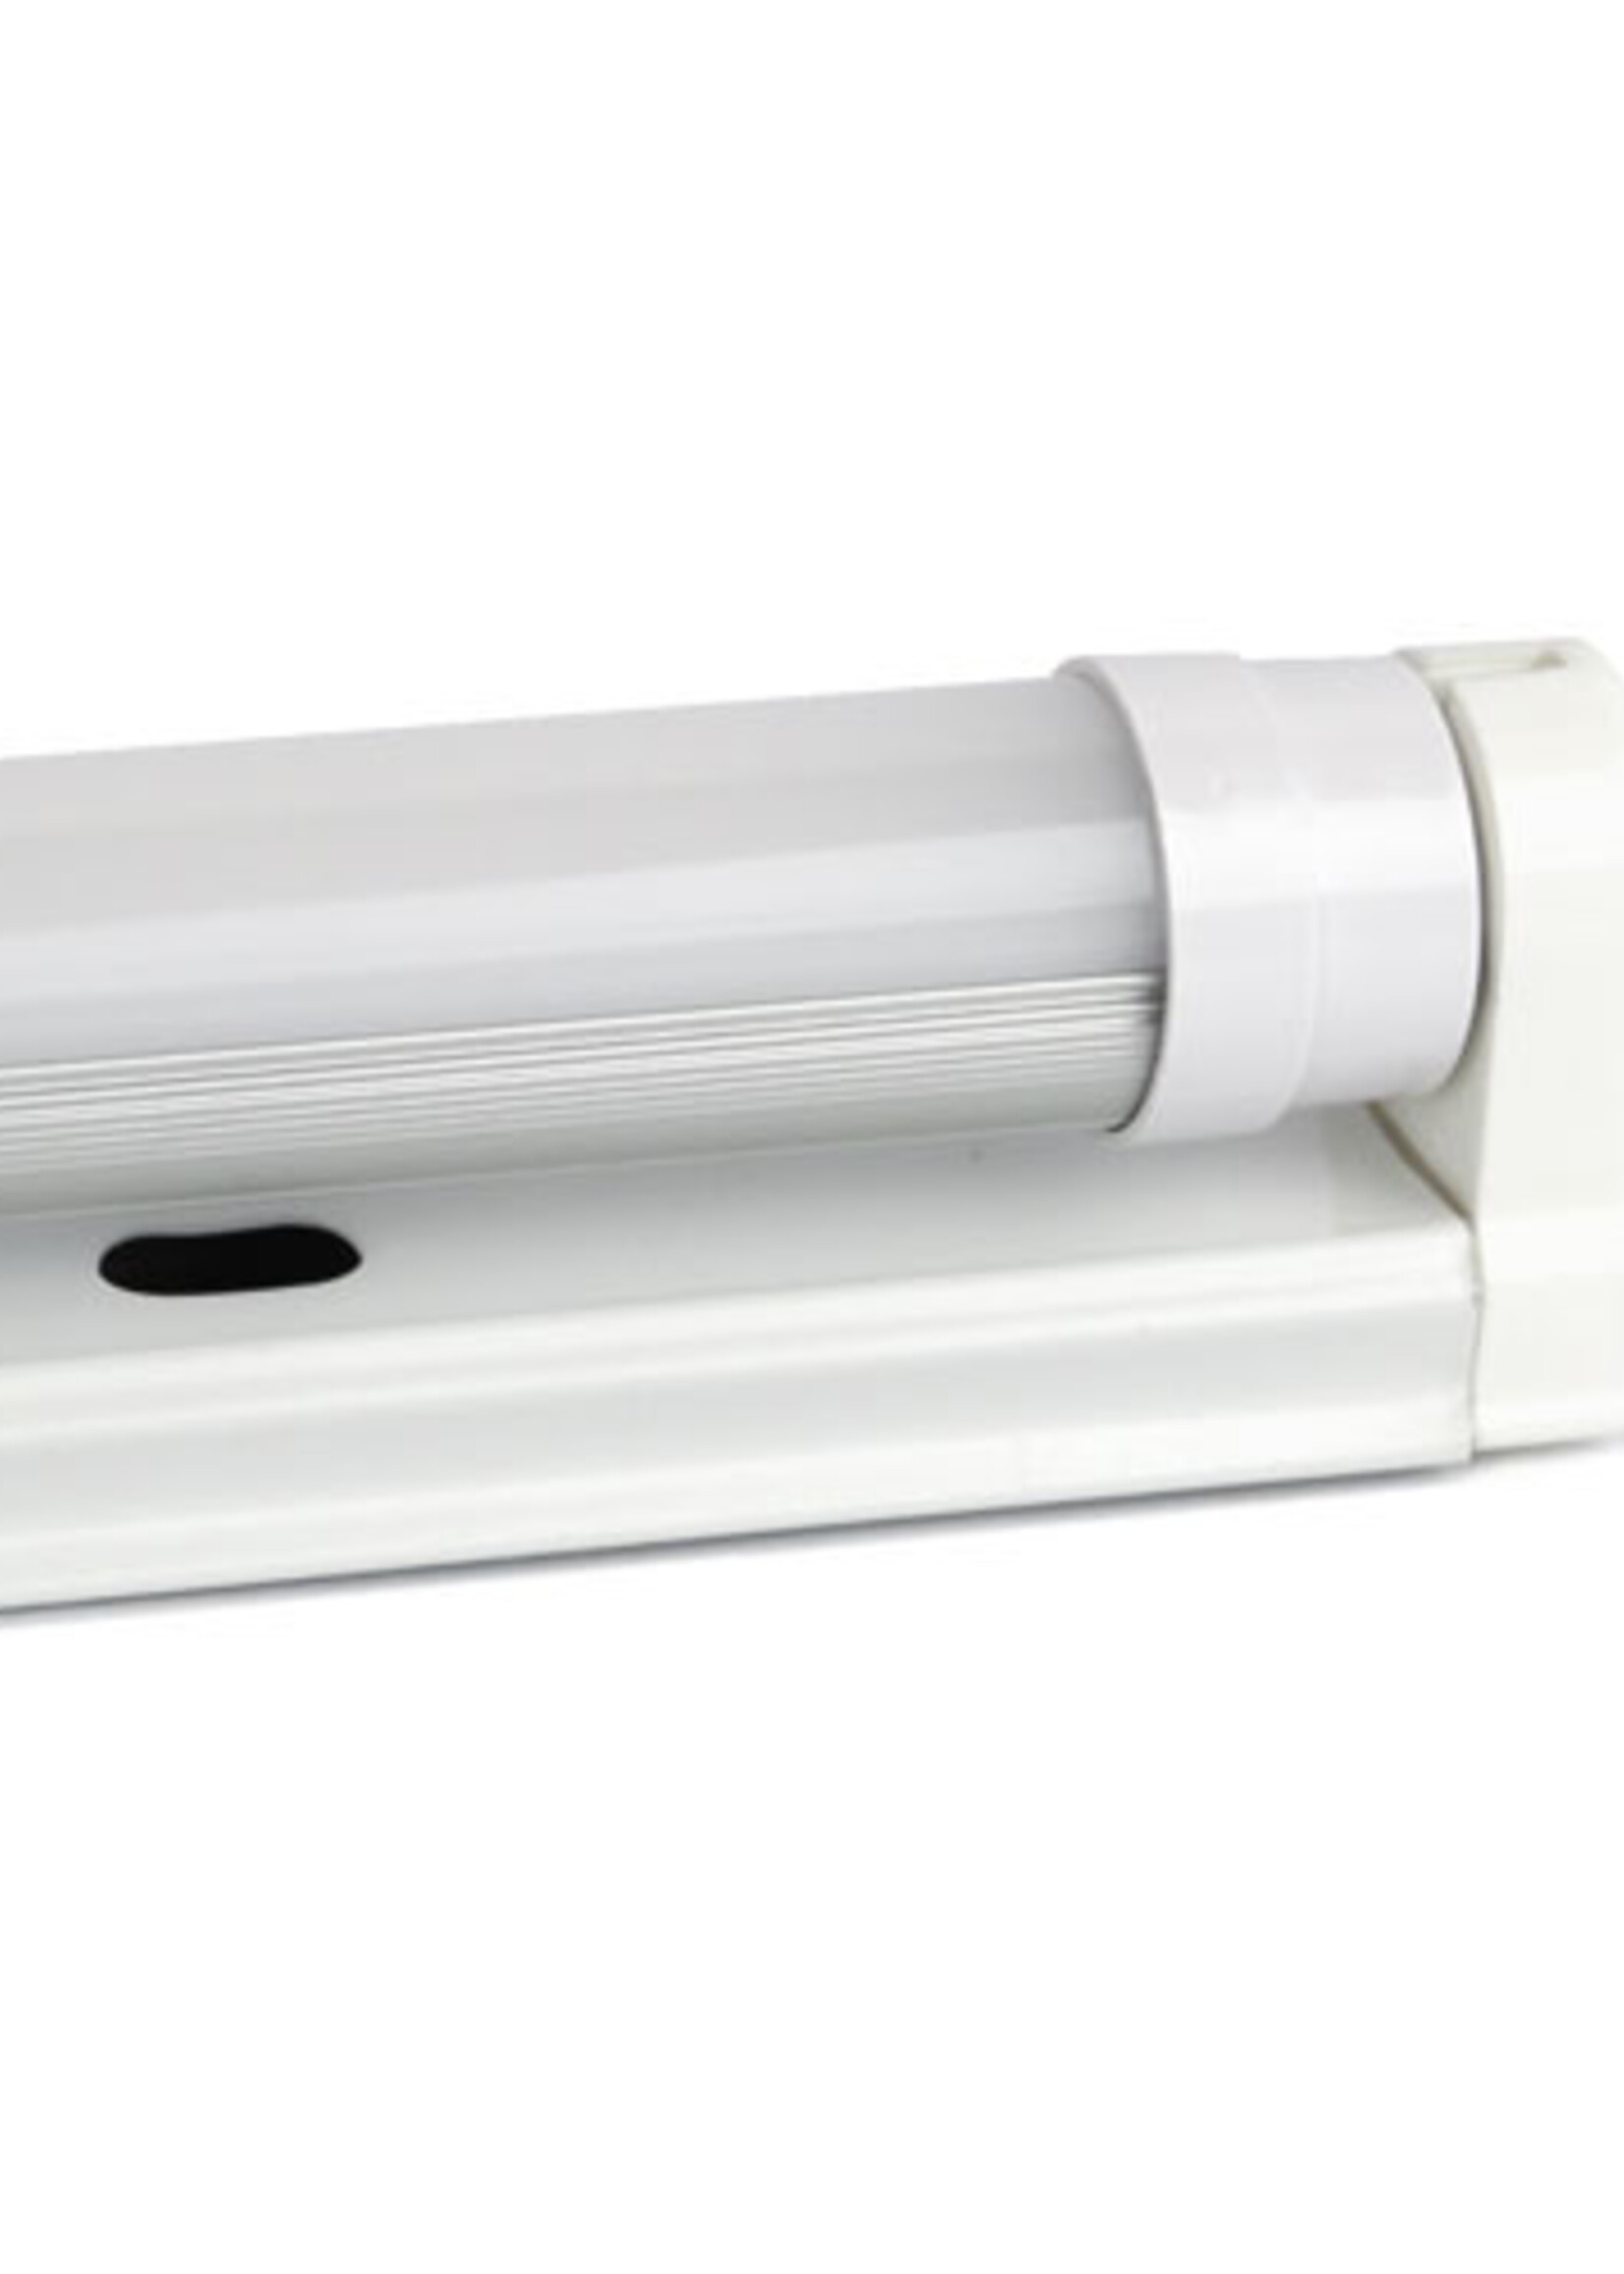 LEDWINKEL-Online LED Tube Light 60cm 9W 120lm/W - High lumen